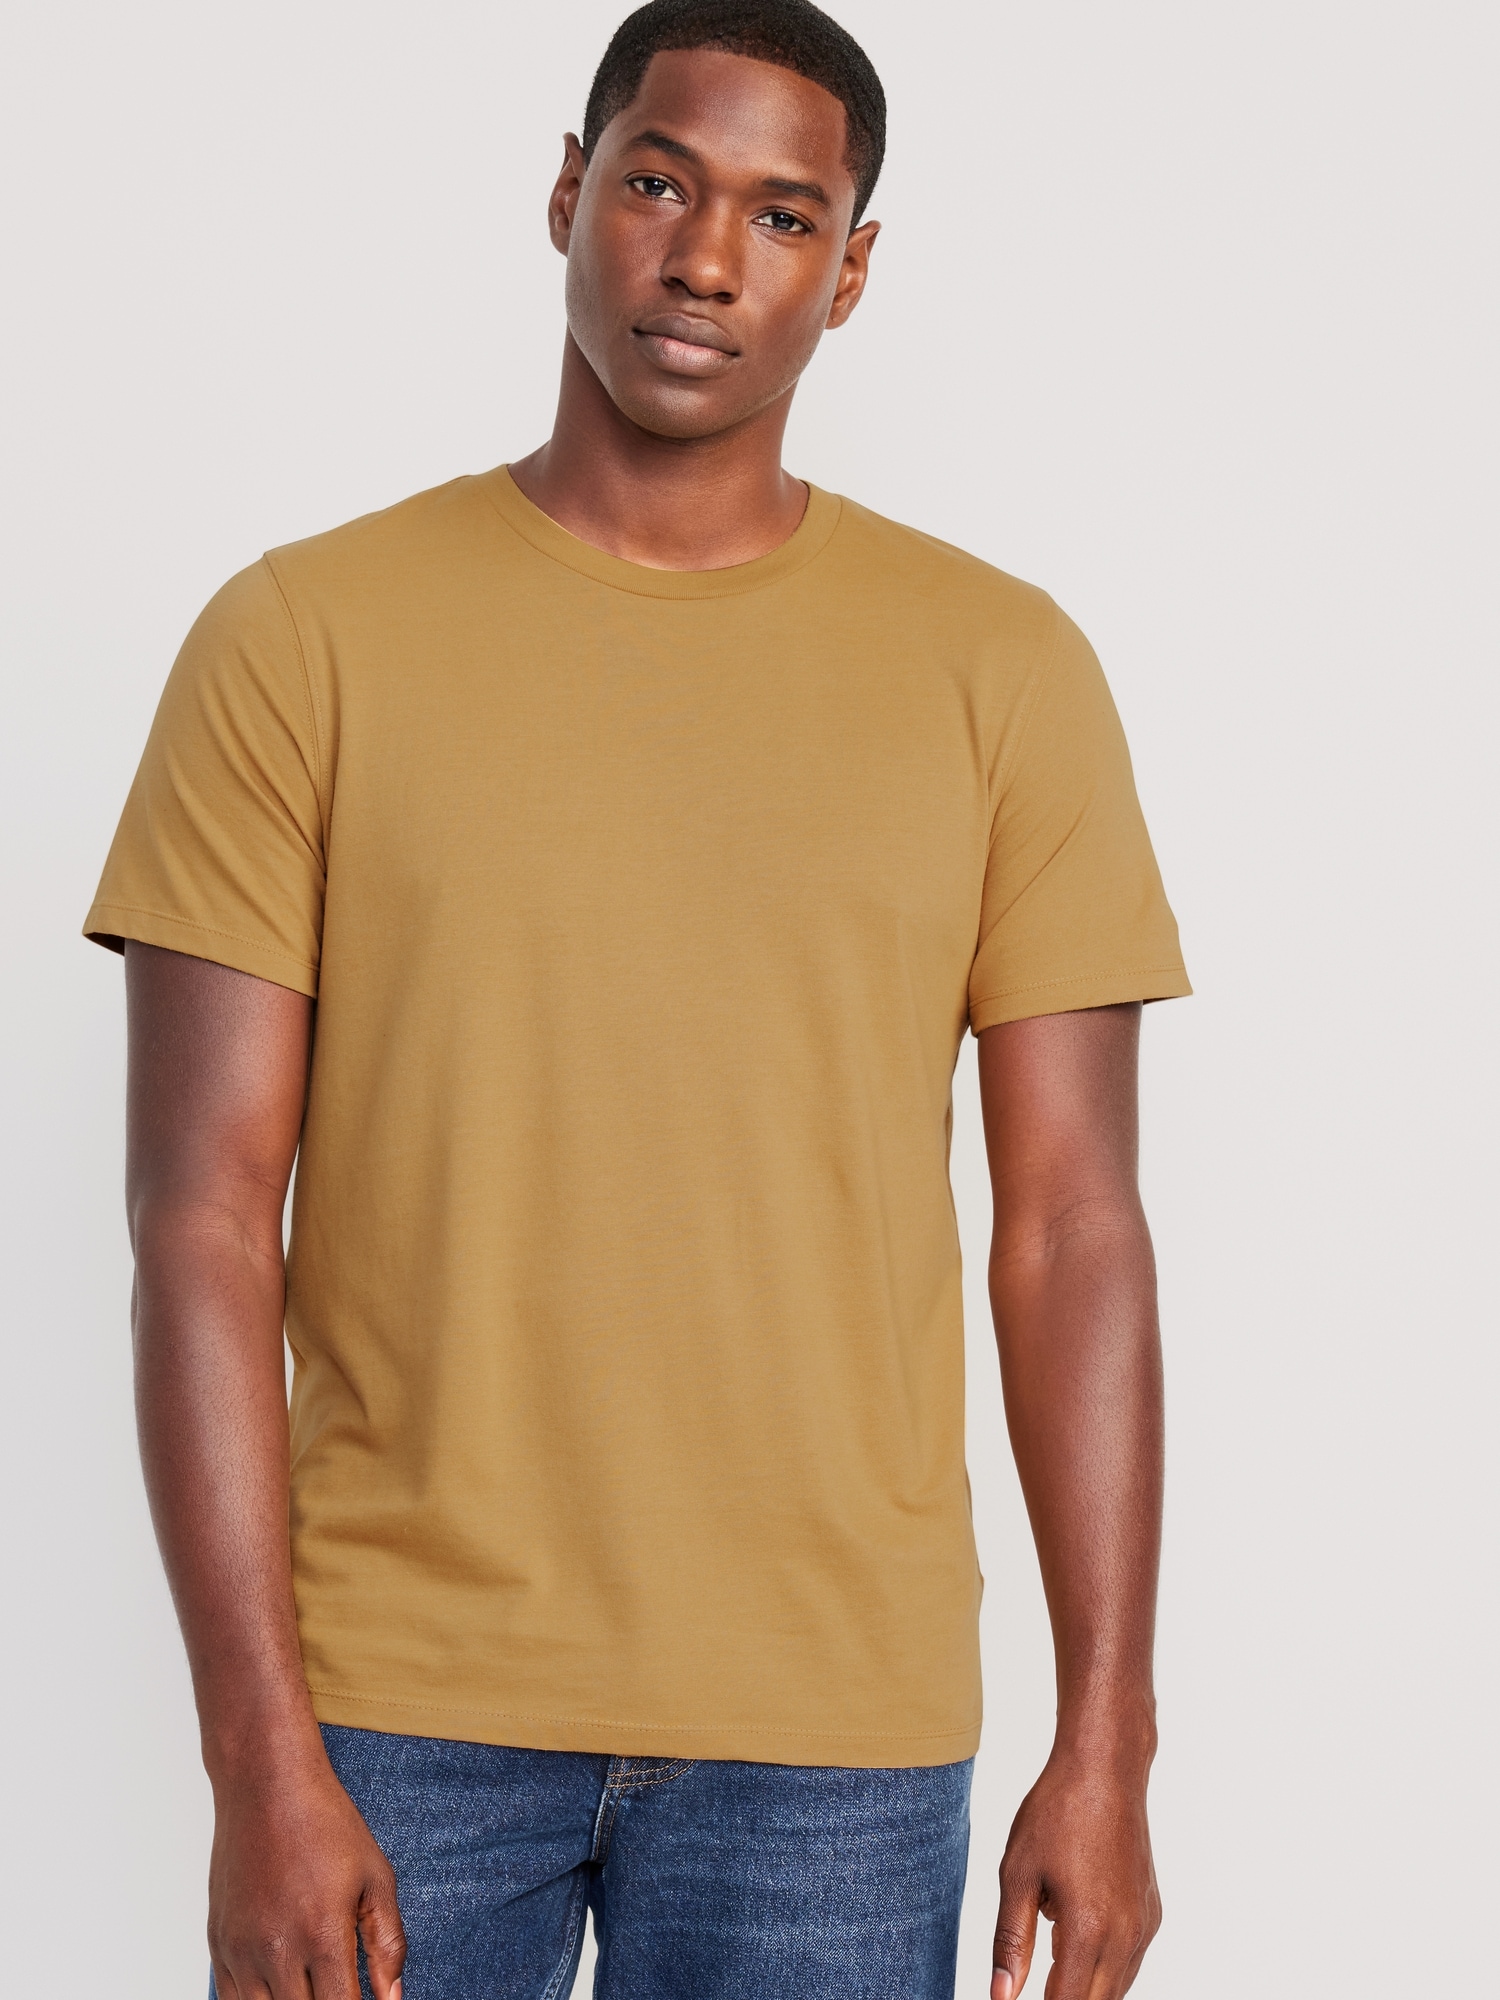 Men's Plain Yellow Crew Neck T-shirt HIGH QUALITY Slim Fit tees